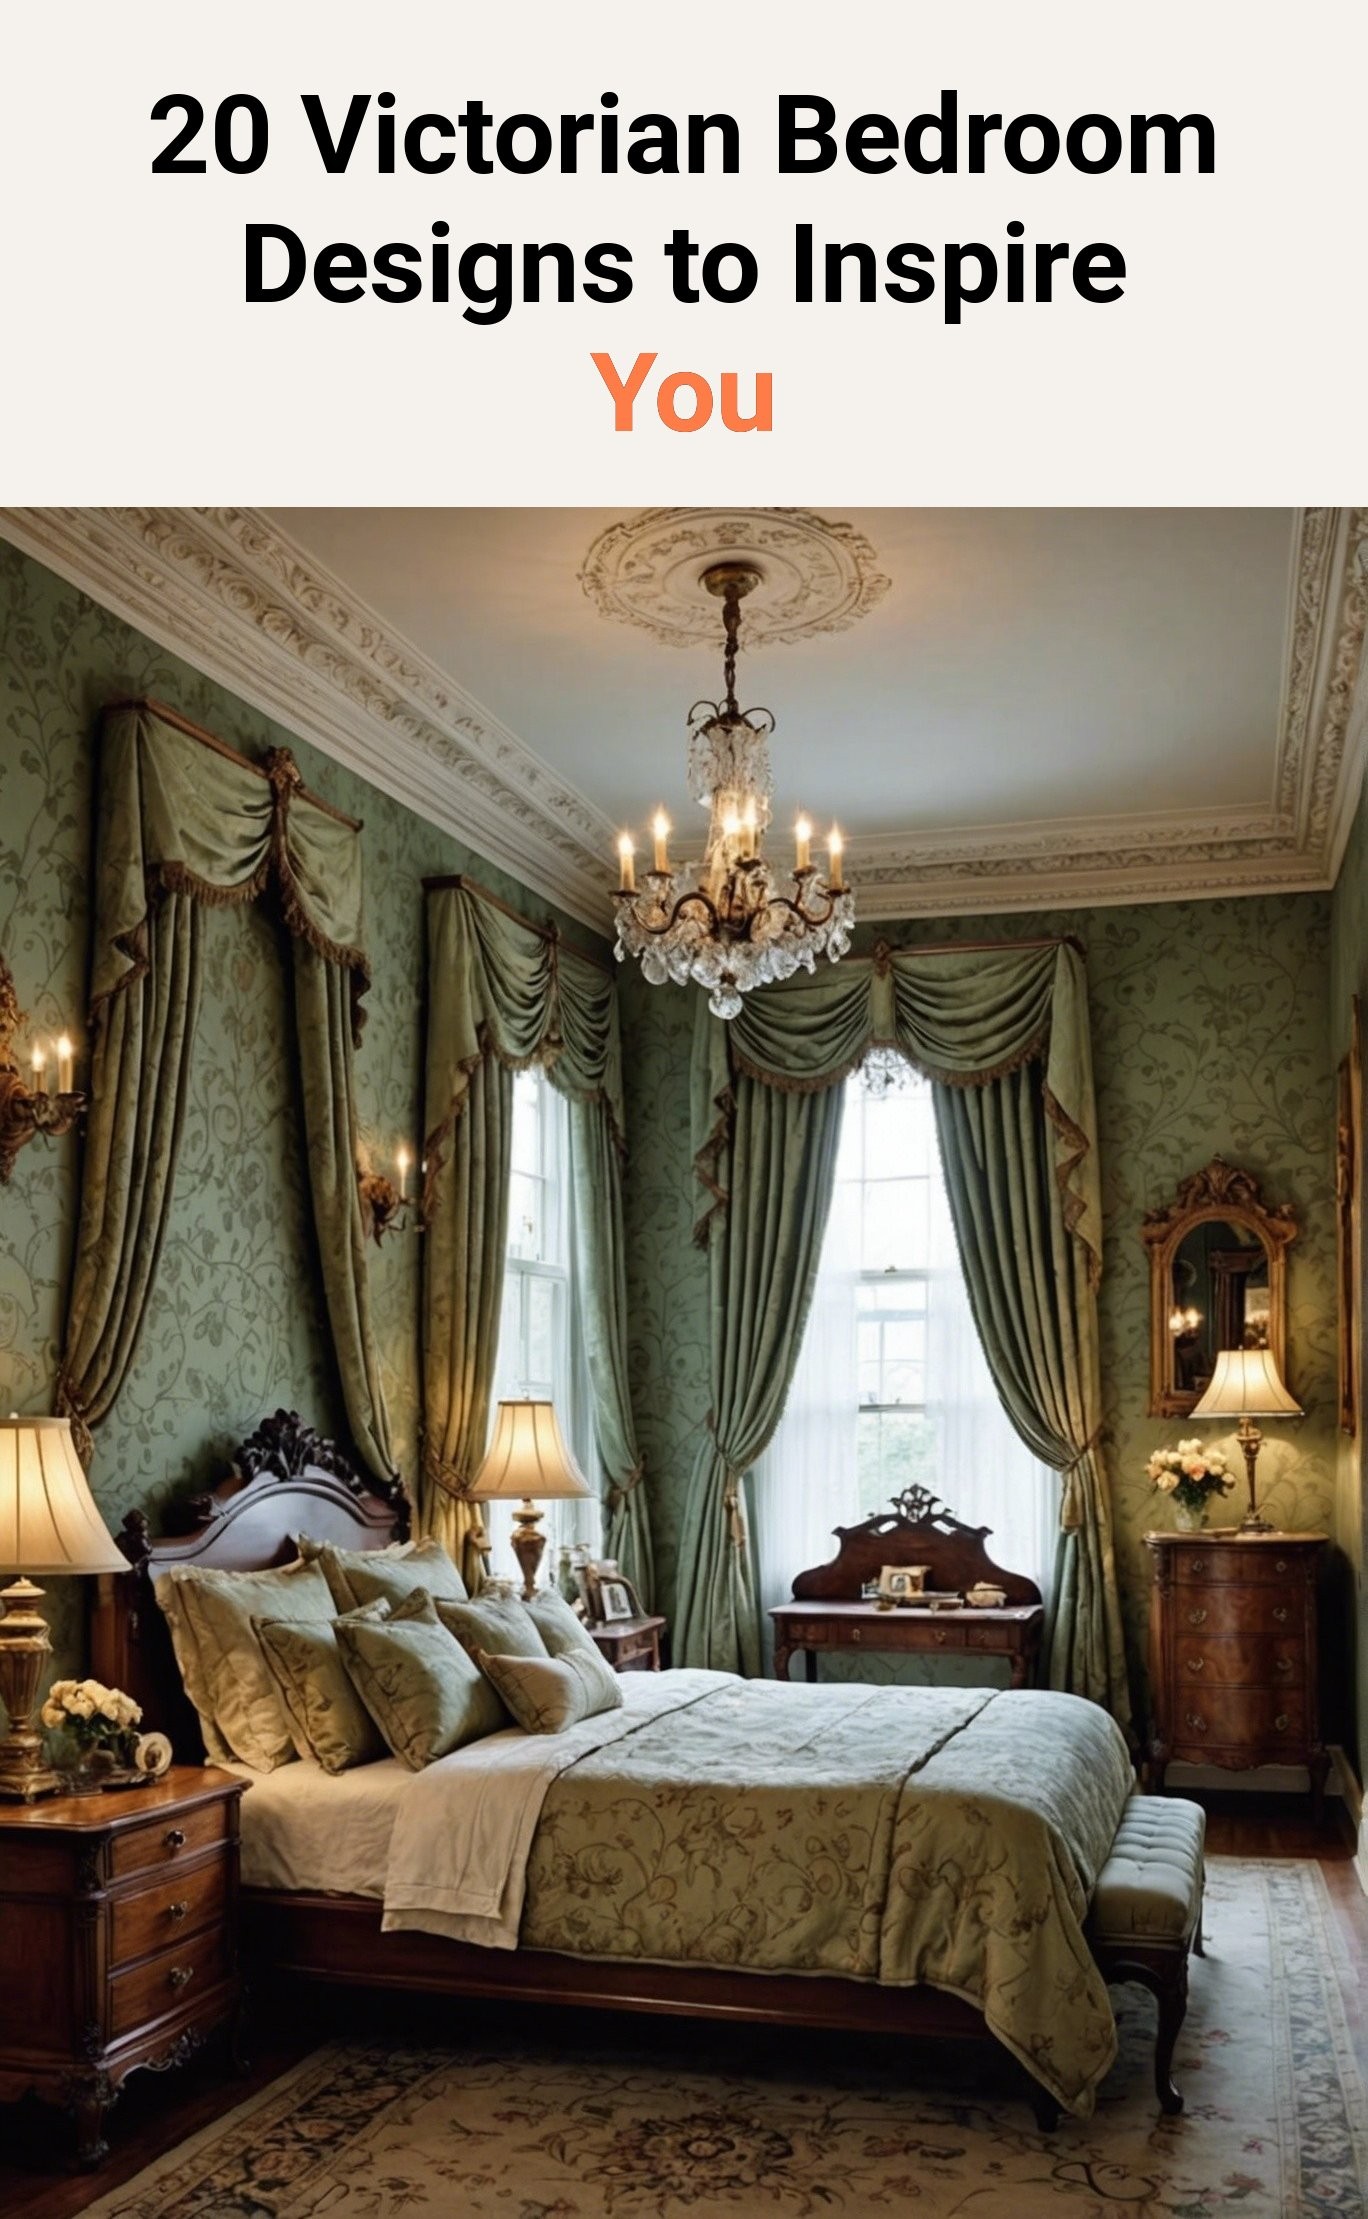 20 Victorian Bedroom Designs to Inspire You